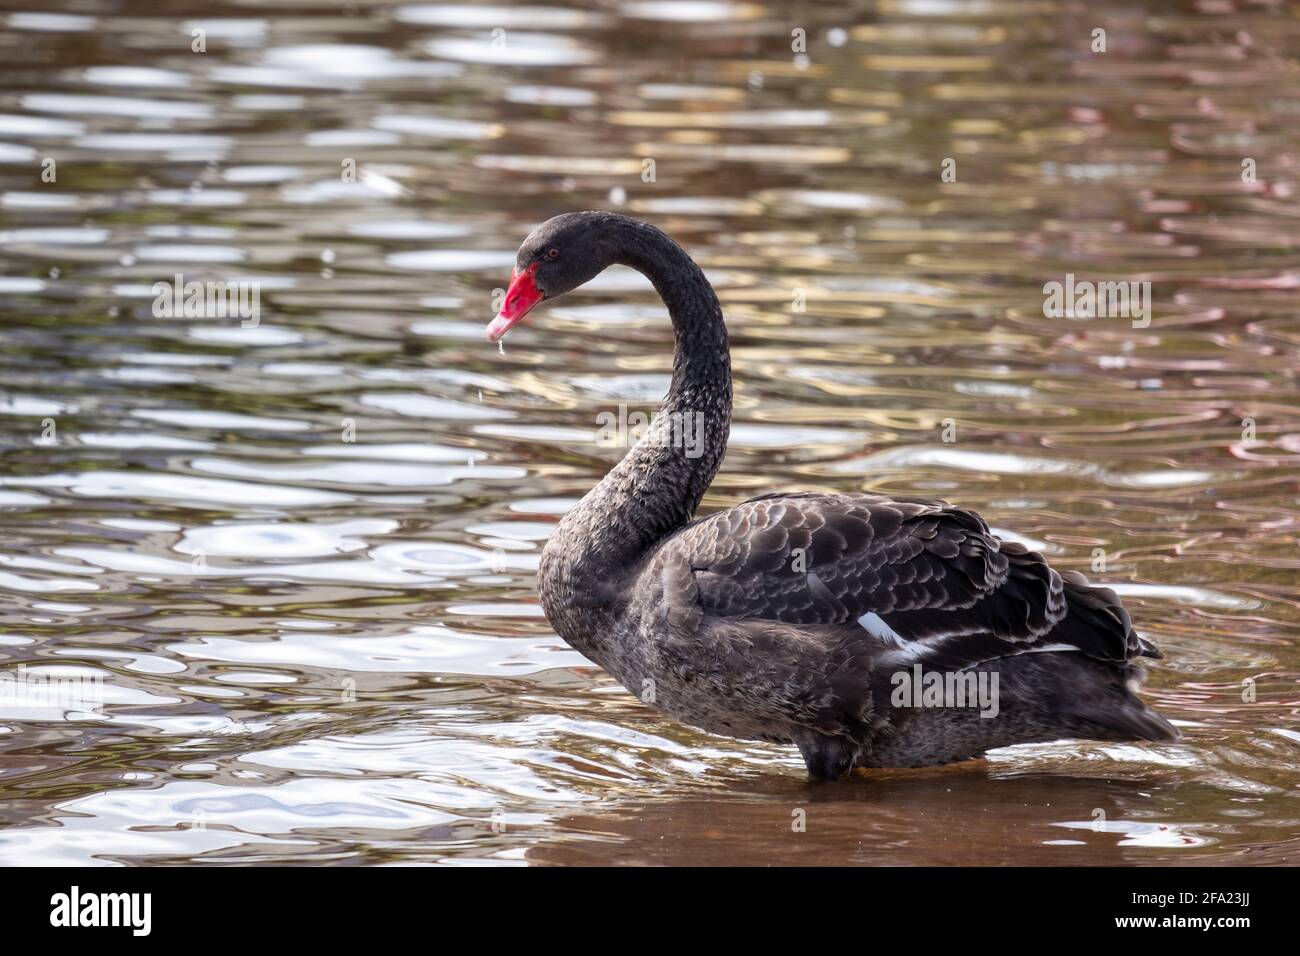 Black Swan standing in shallow waters, Dawlish, Devon, UK Stock Photo